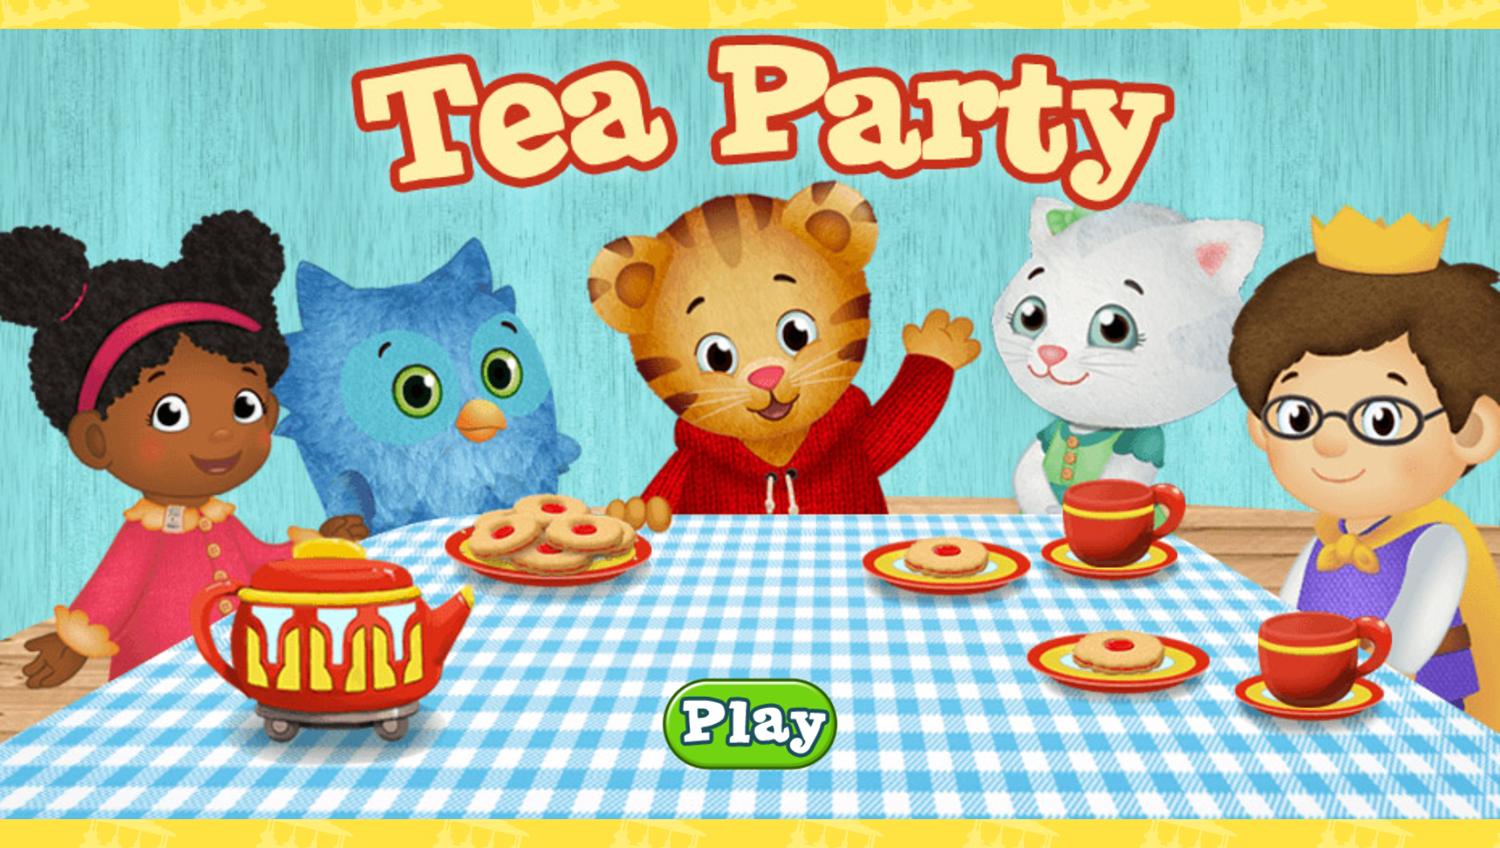 Daniel Tiger's Neighborhood Tea Party Game Welcome Screen Screenshot.